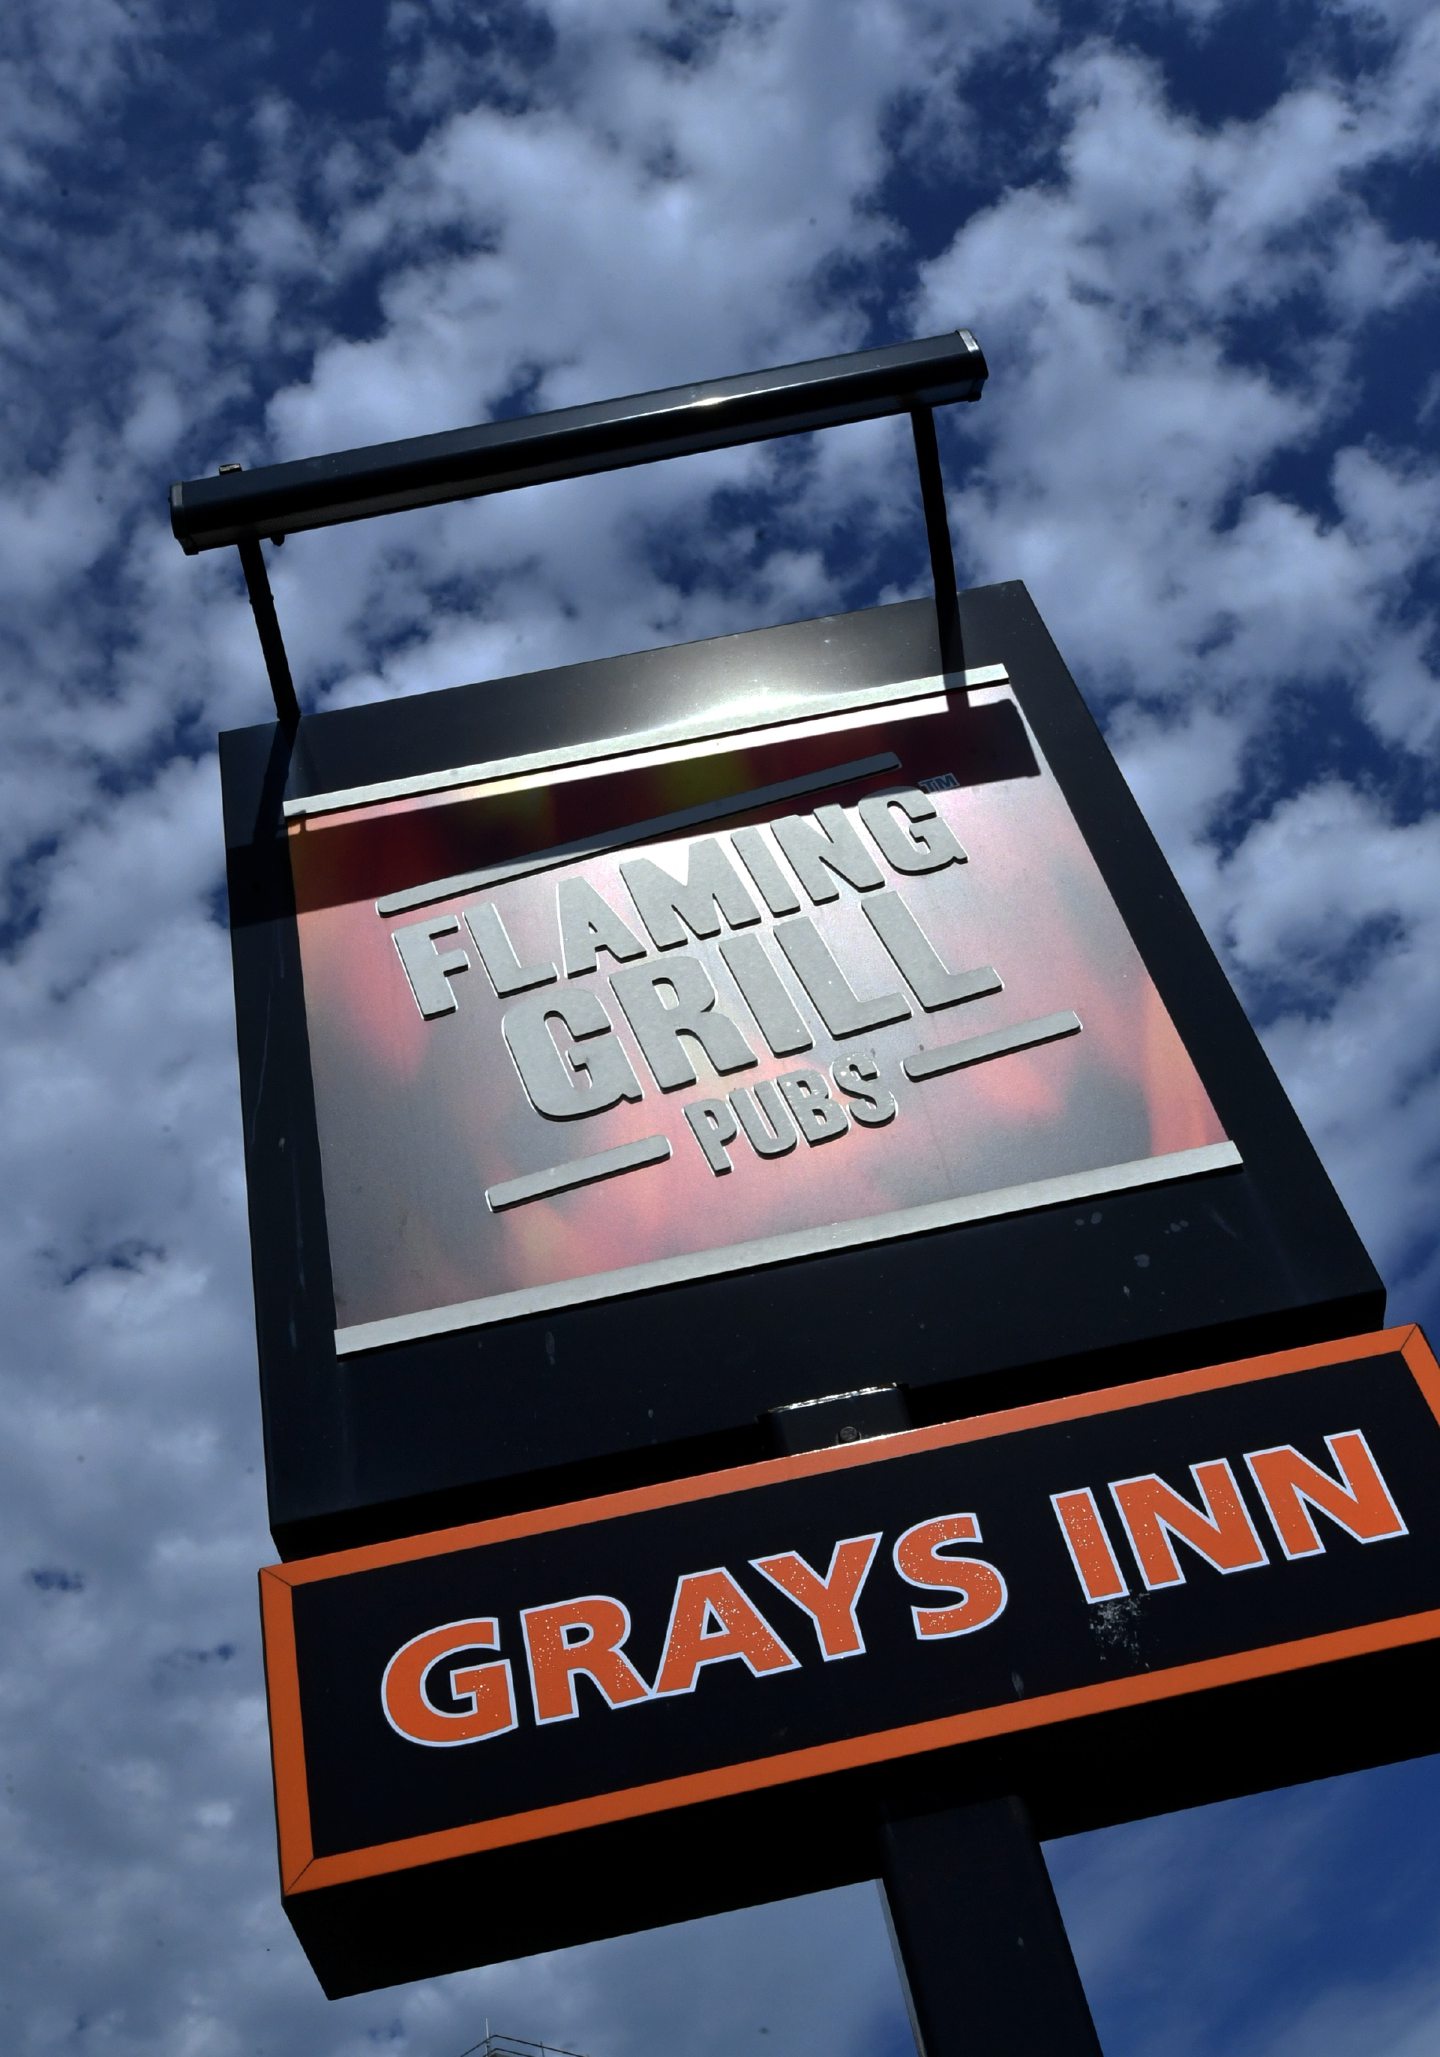 A Grays Inn sign